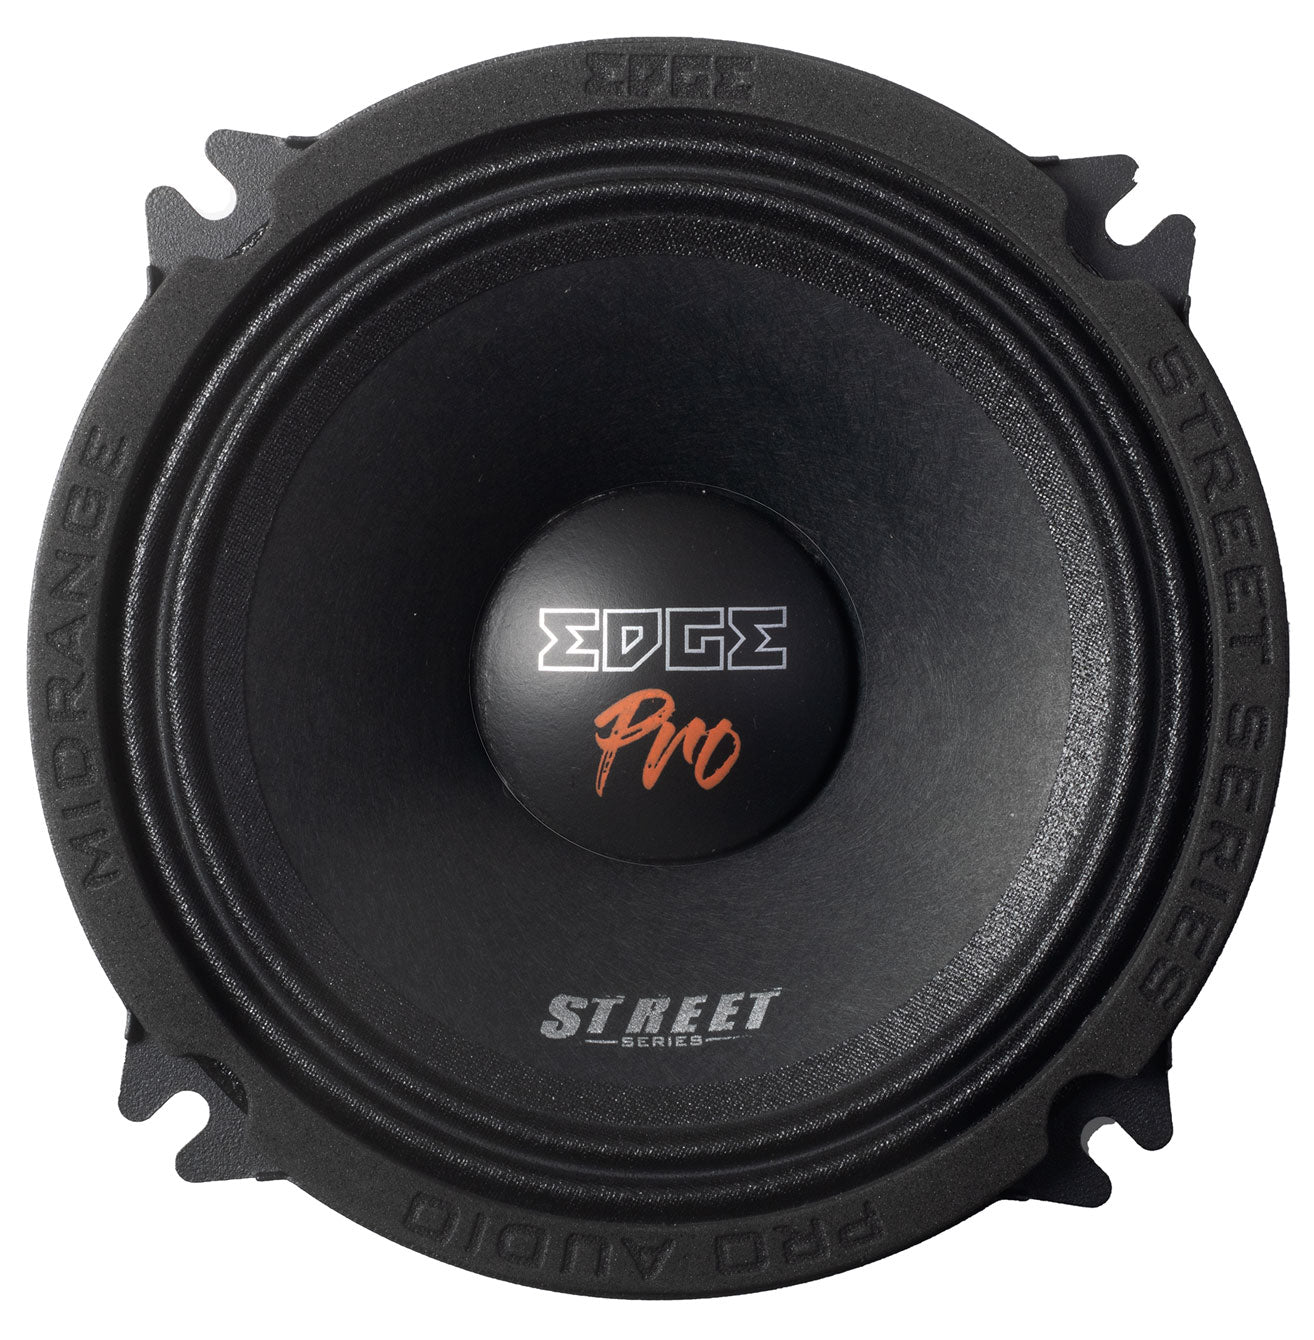 EDSPRO5N-E0 | EDGE Street Series 5.25 inch 260 watts Neodymium Magnet Pro Audio Midrange Speakers - Pair